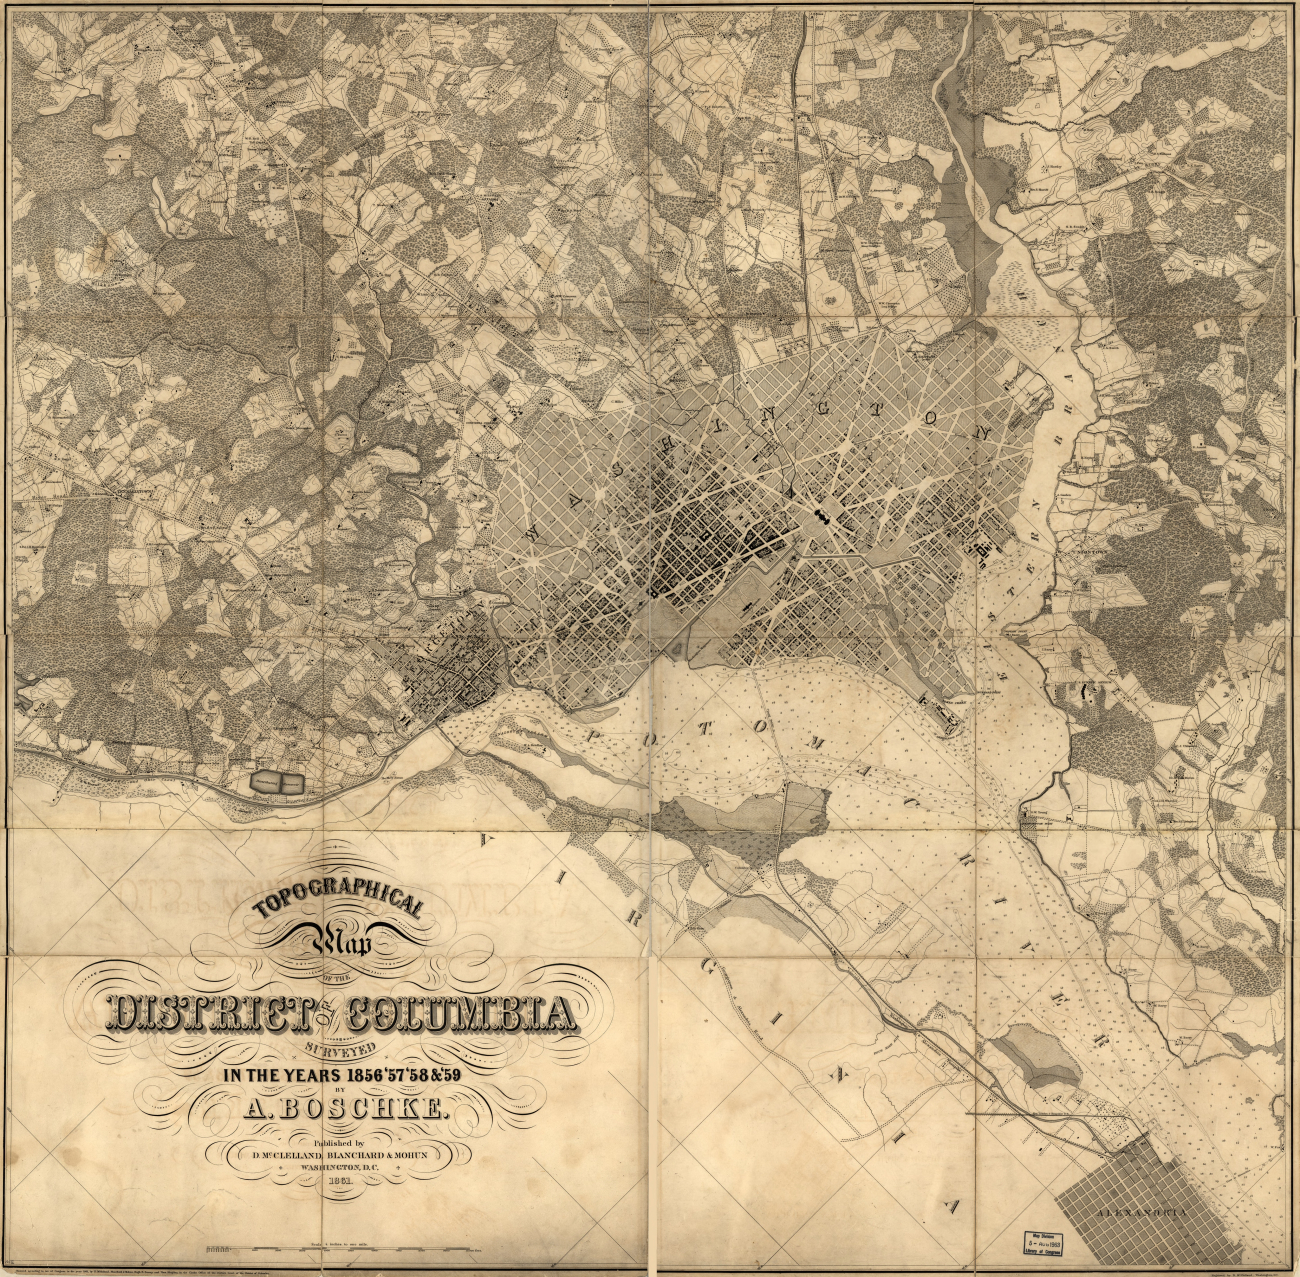 Albert Boschke's map of the District of Columbia